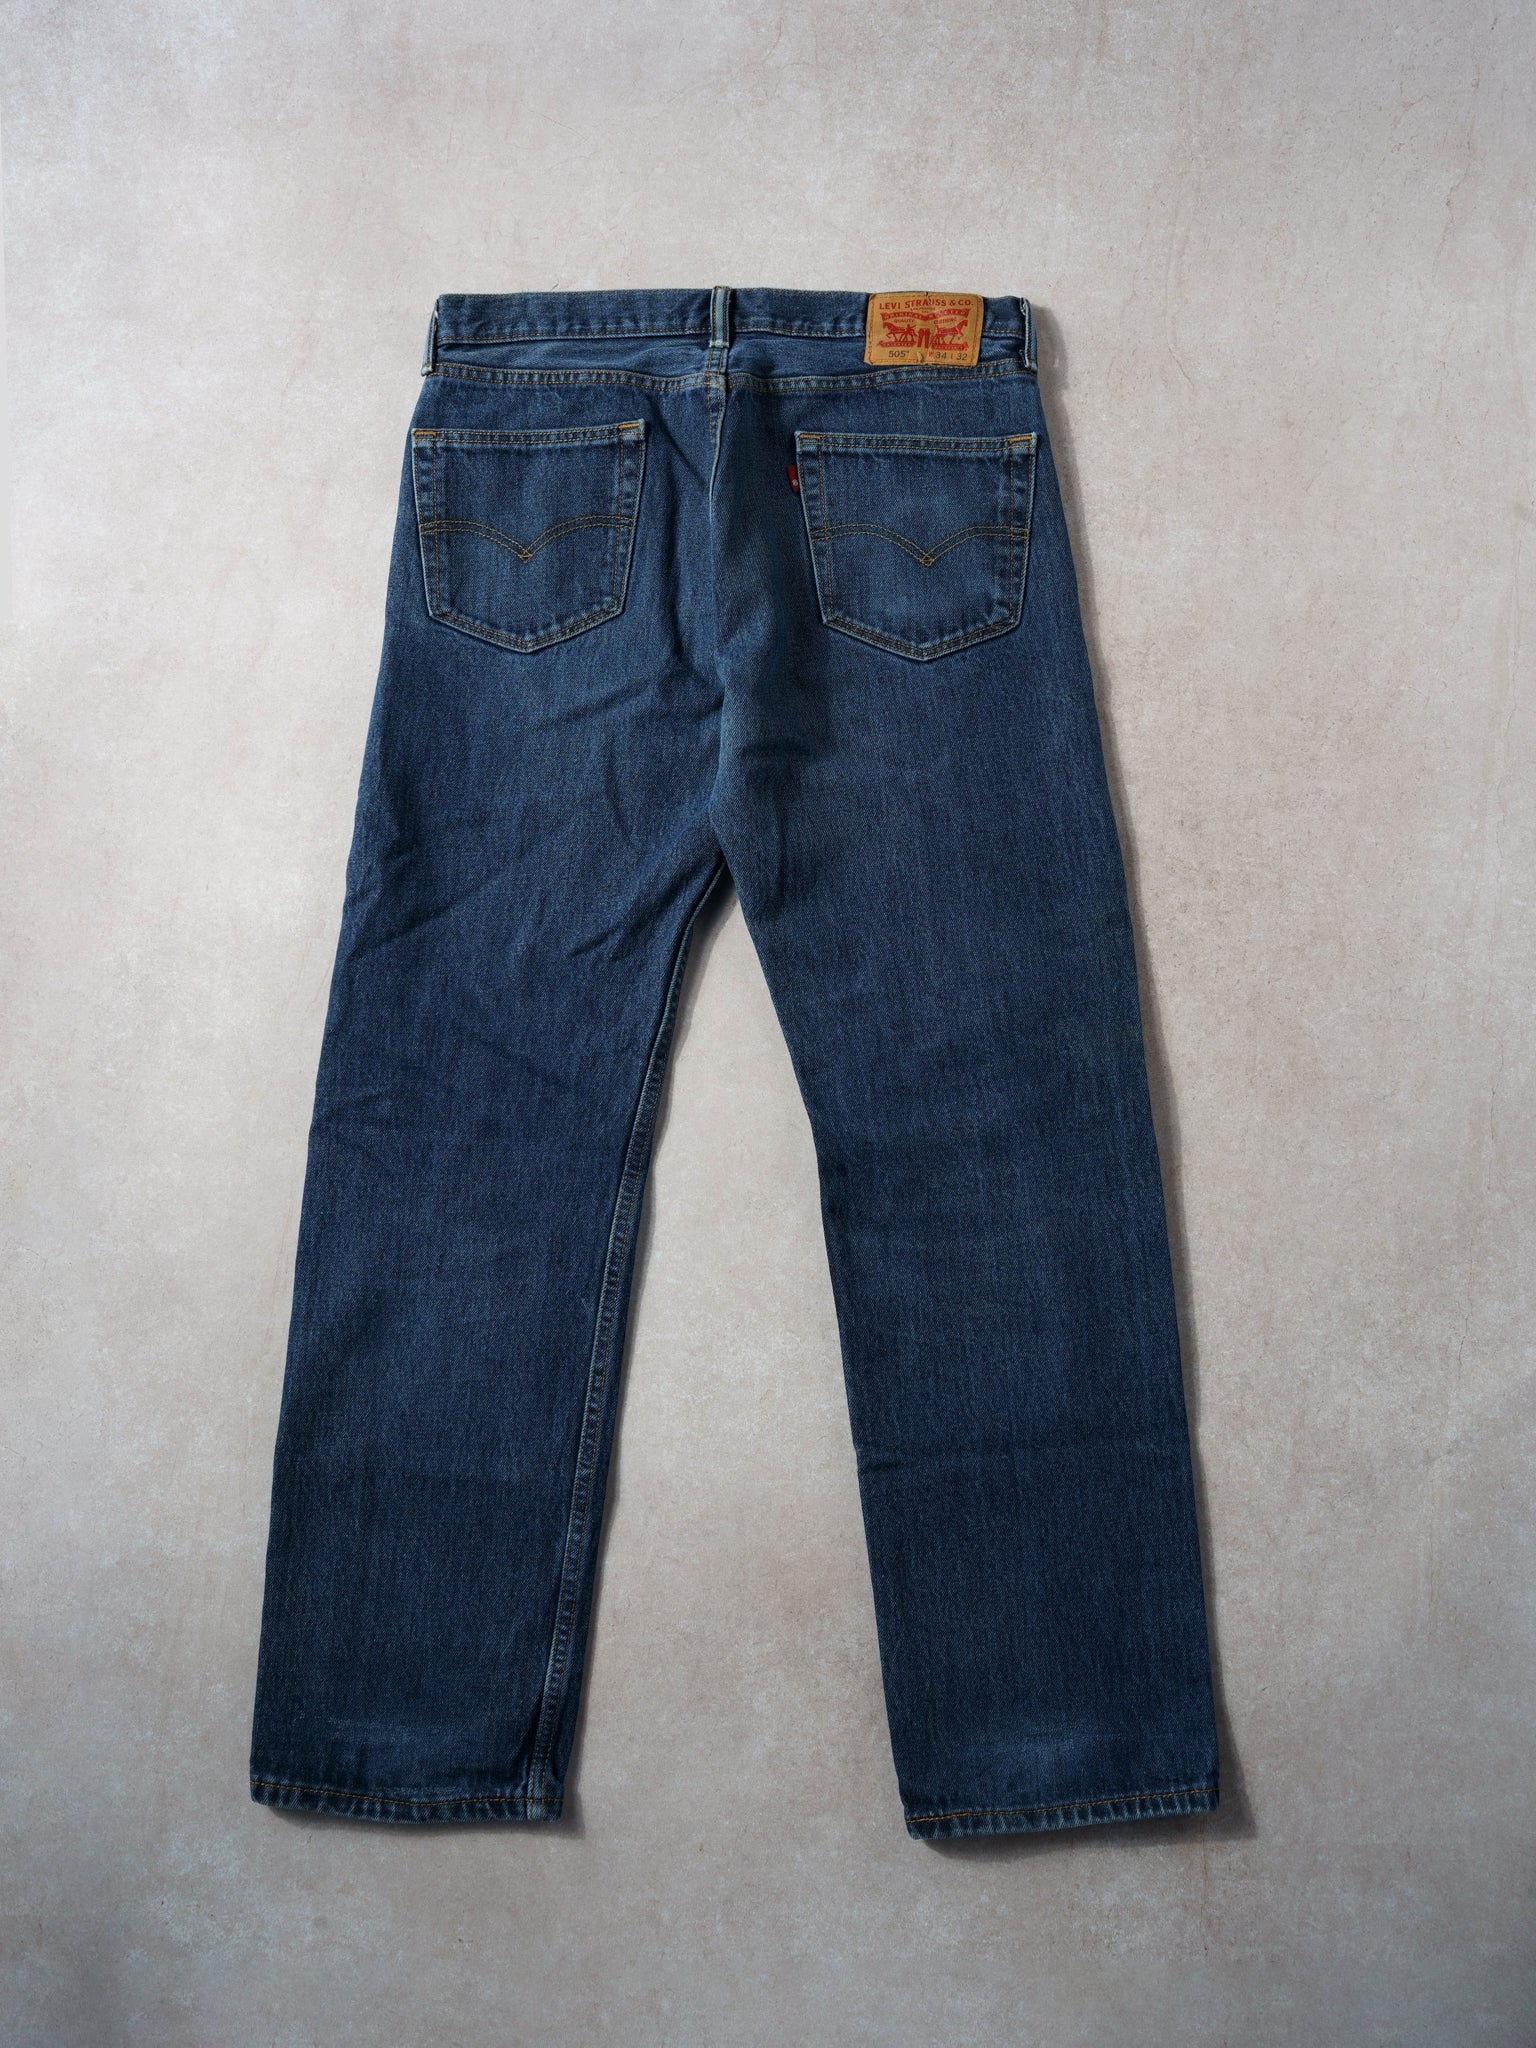 Vintage Dark Blue Levi's 505 Denim Jeans (36x31)